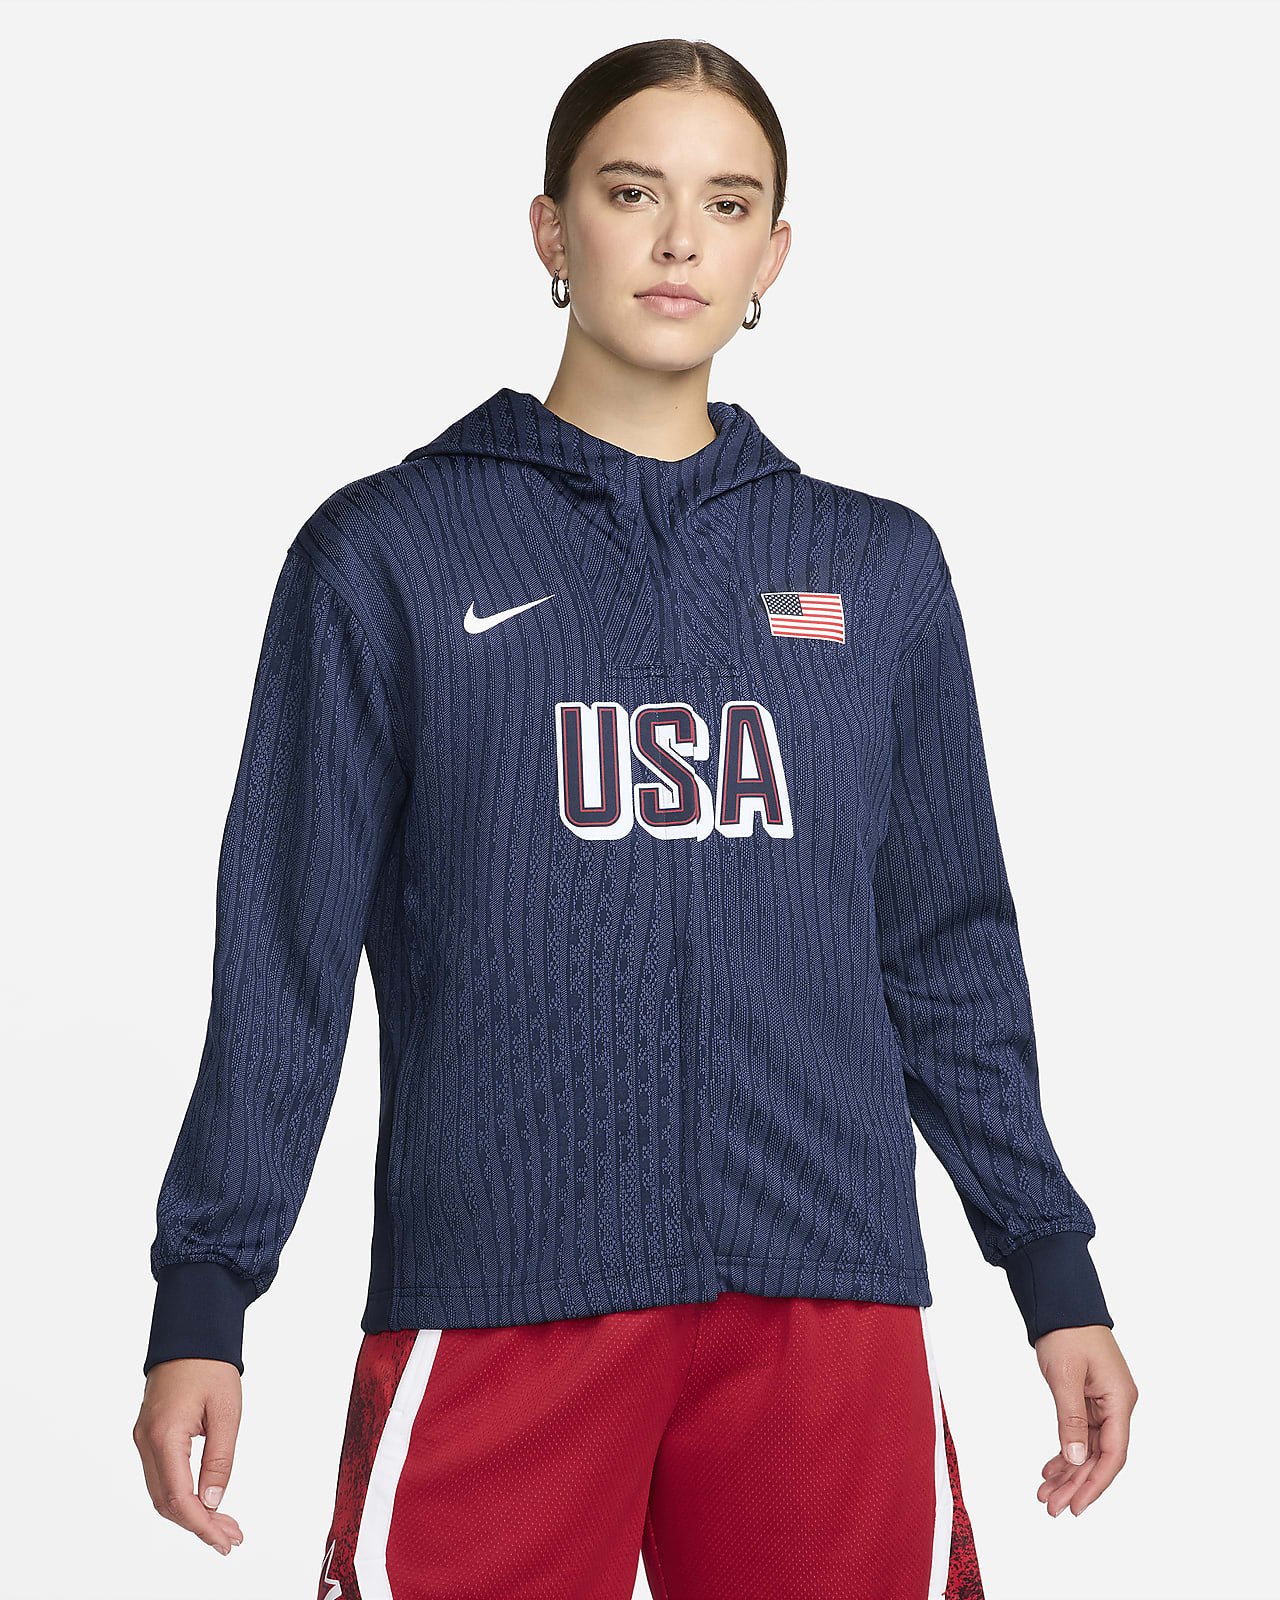 USA Women's Nike Dri-FIT ADV Basketball Game Jacket